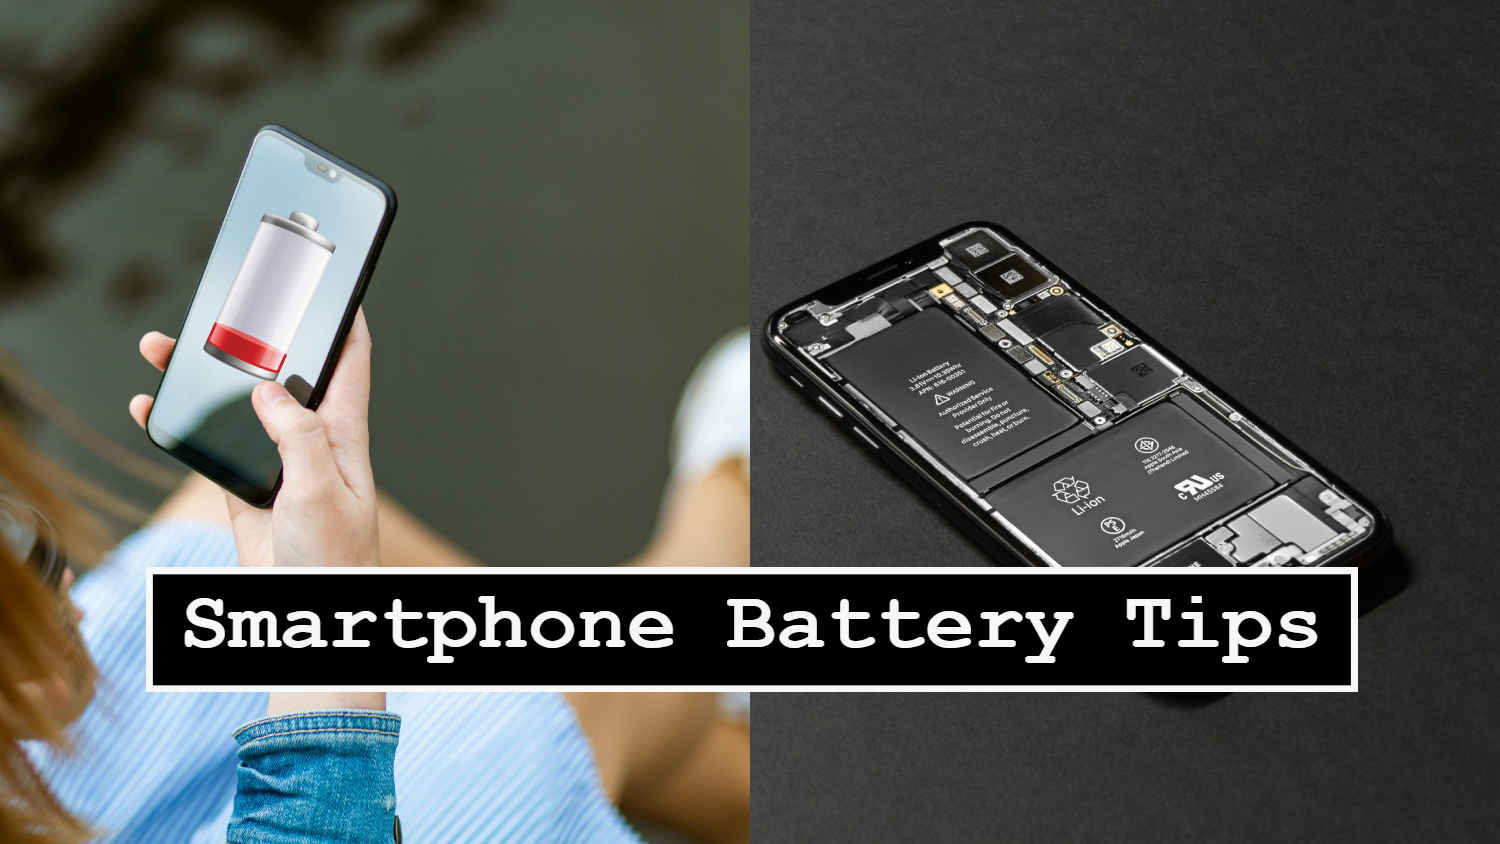 Phone Battery: ಫೋನ್‌ ಬ್ಯಾಟರಿ ಊದಿಕೊಂಡಿದ್ದರೆ ಎಚ್ಚರ, ಯಾವುದೇ ಸಮಯದಲ್ಲಿ ಸ್ಫೋಟಿಸಬಹುದು